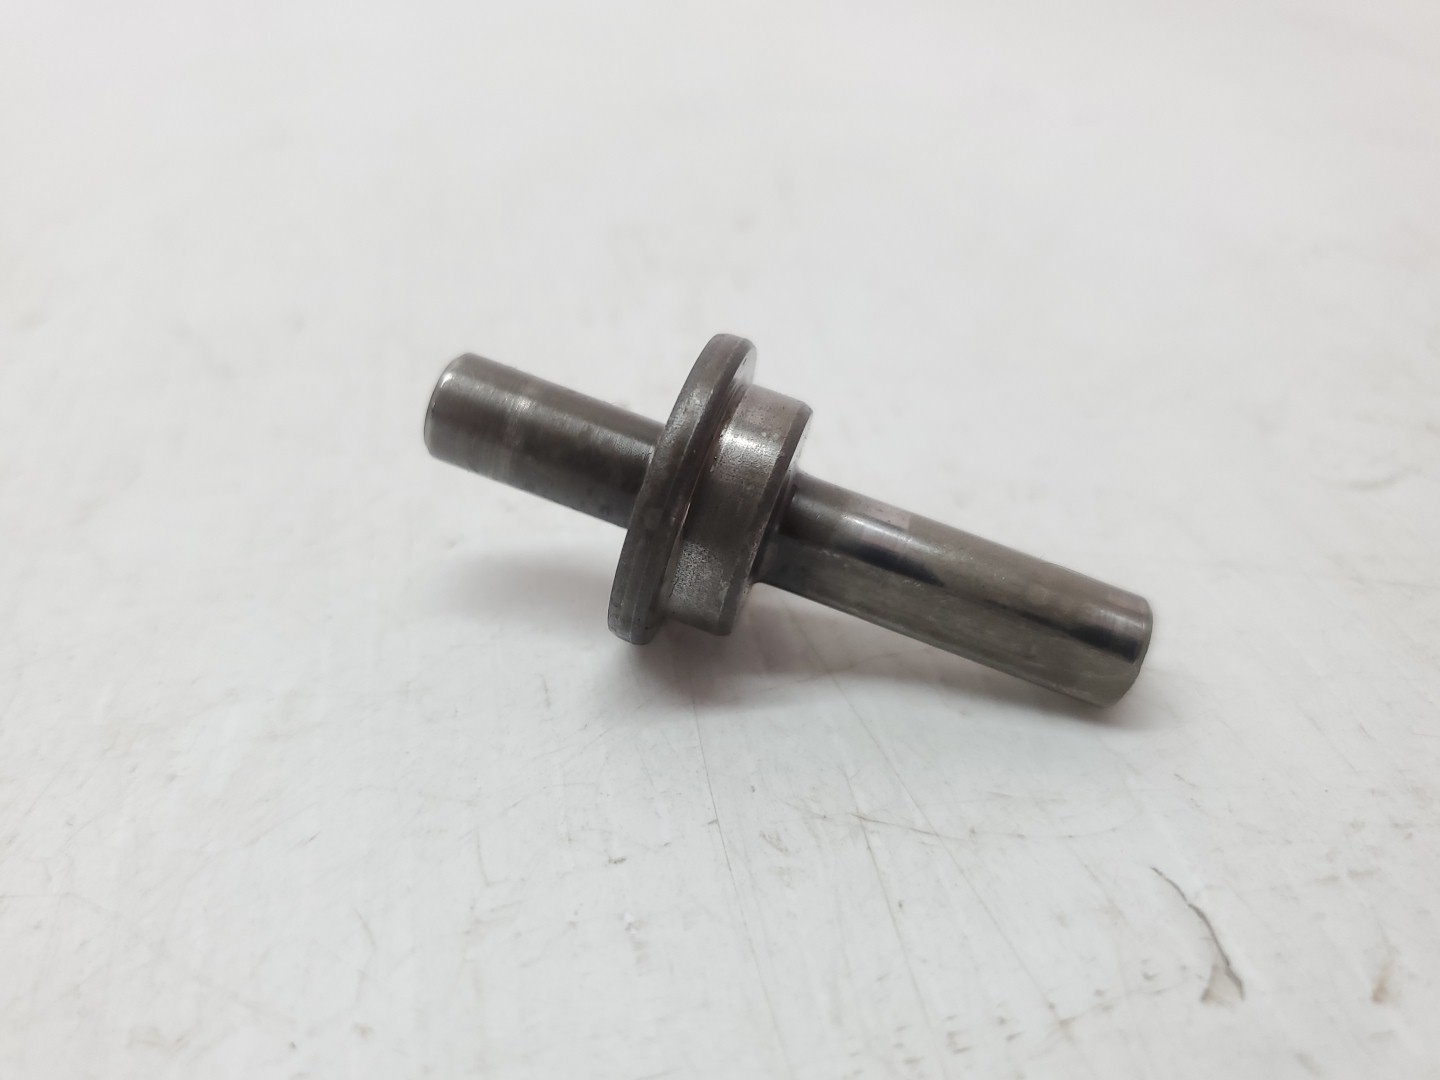 Clutch Lifter Pin Pressure Piece XR250R 1999 XR 250 R 99 Honda 96-04 #WMC